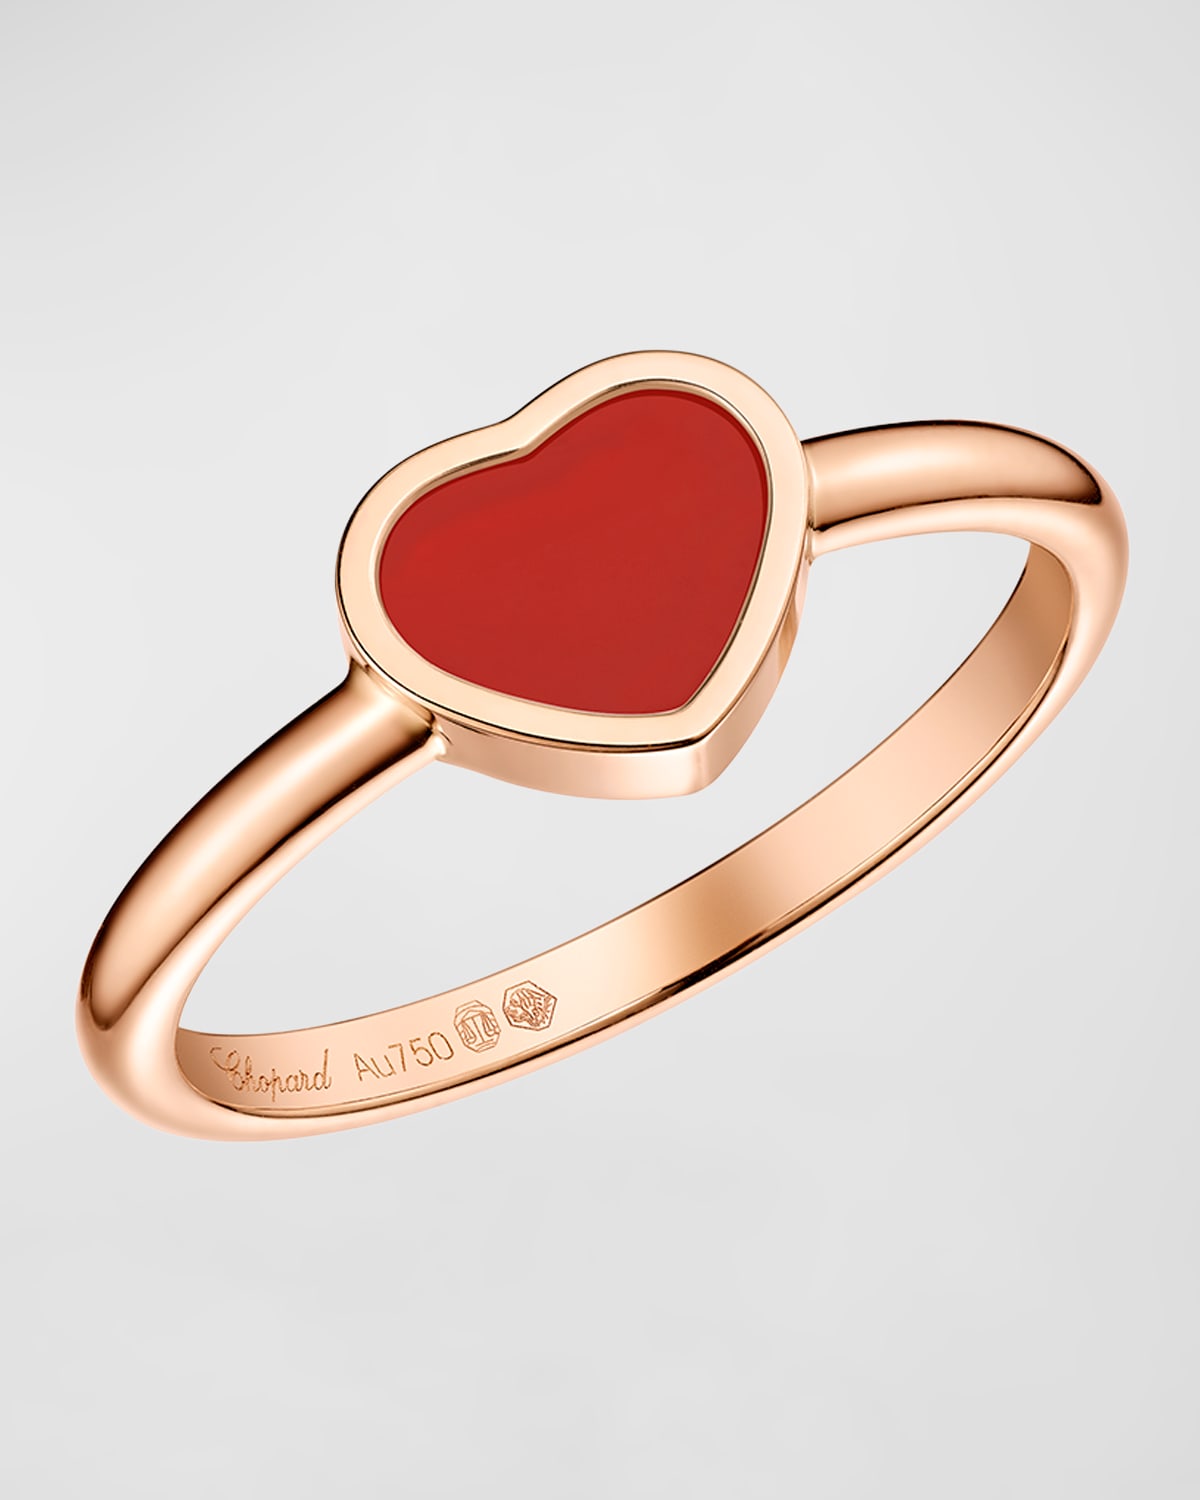 Chopard Rose Gold Happy Heart Carnelian Ring - Size 53